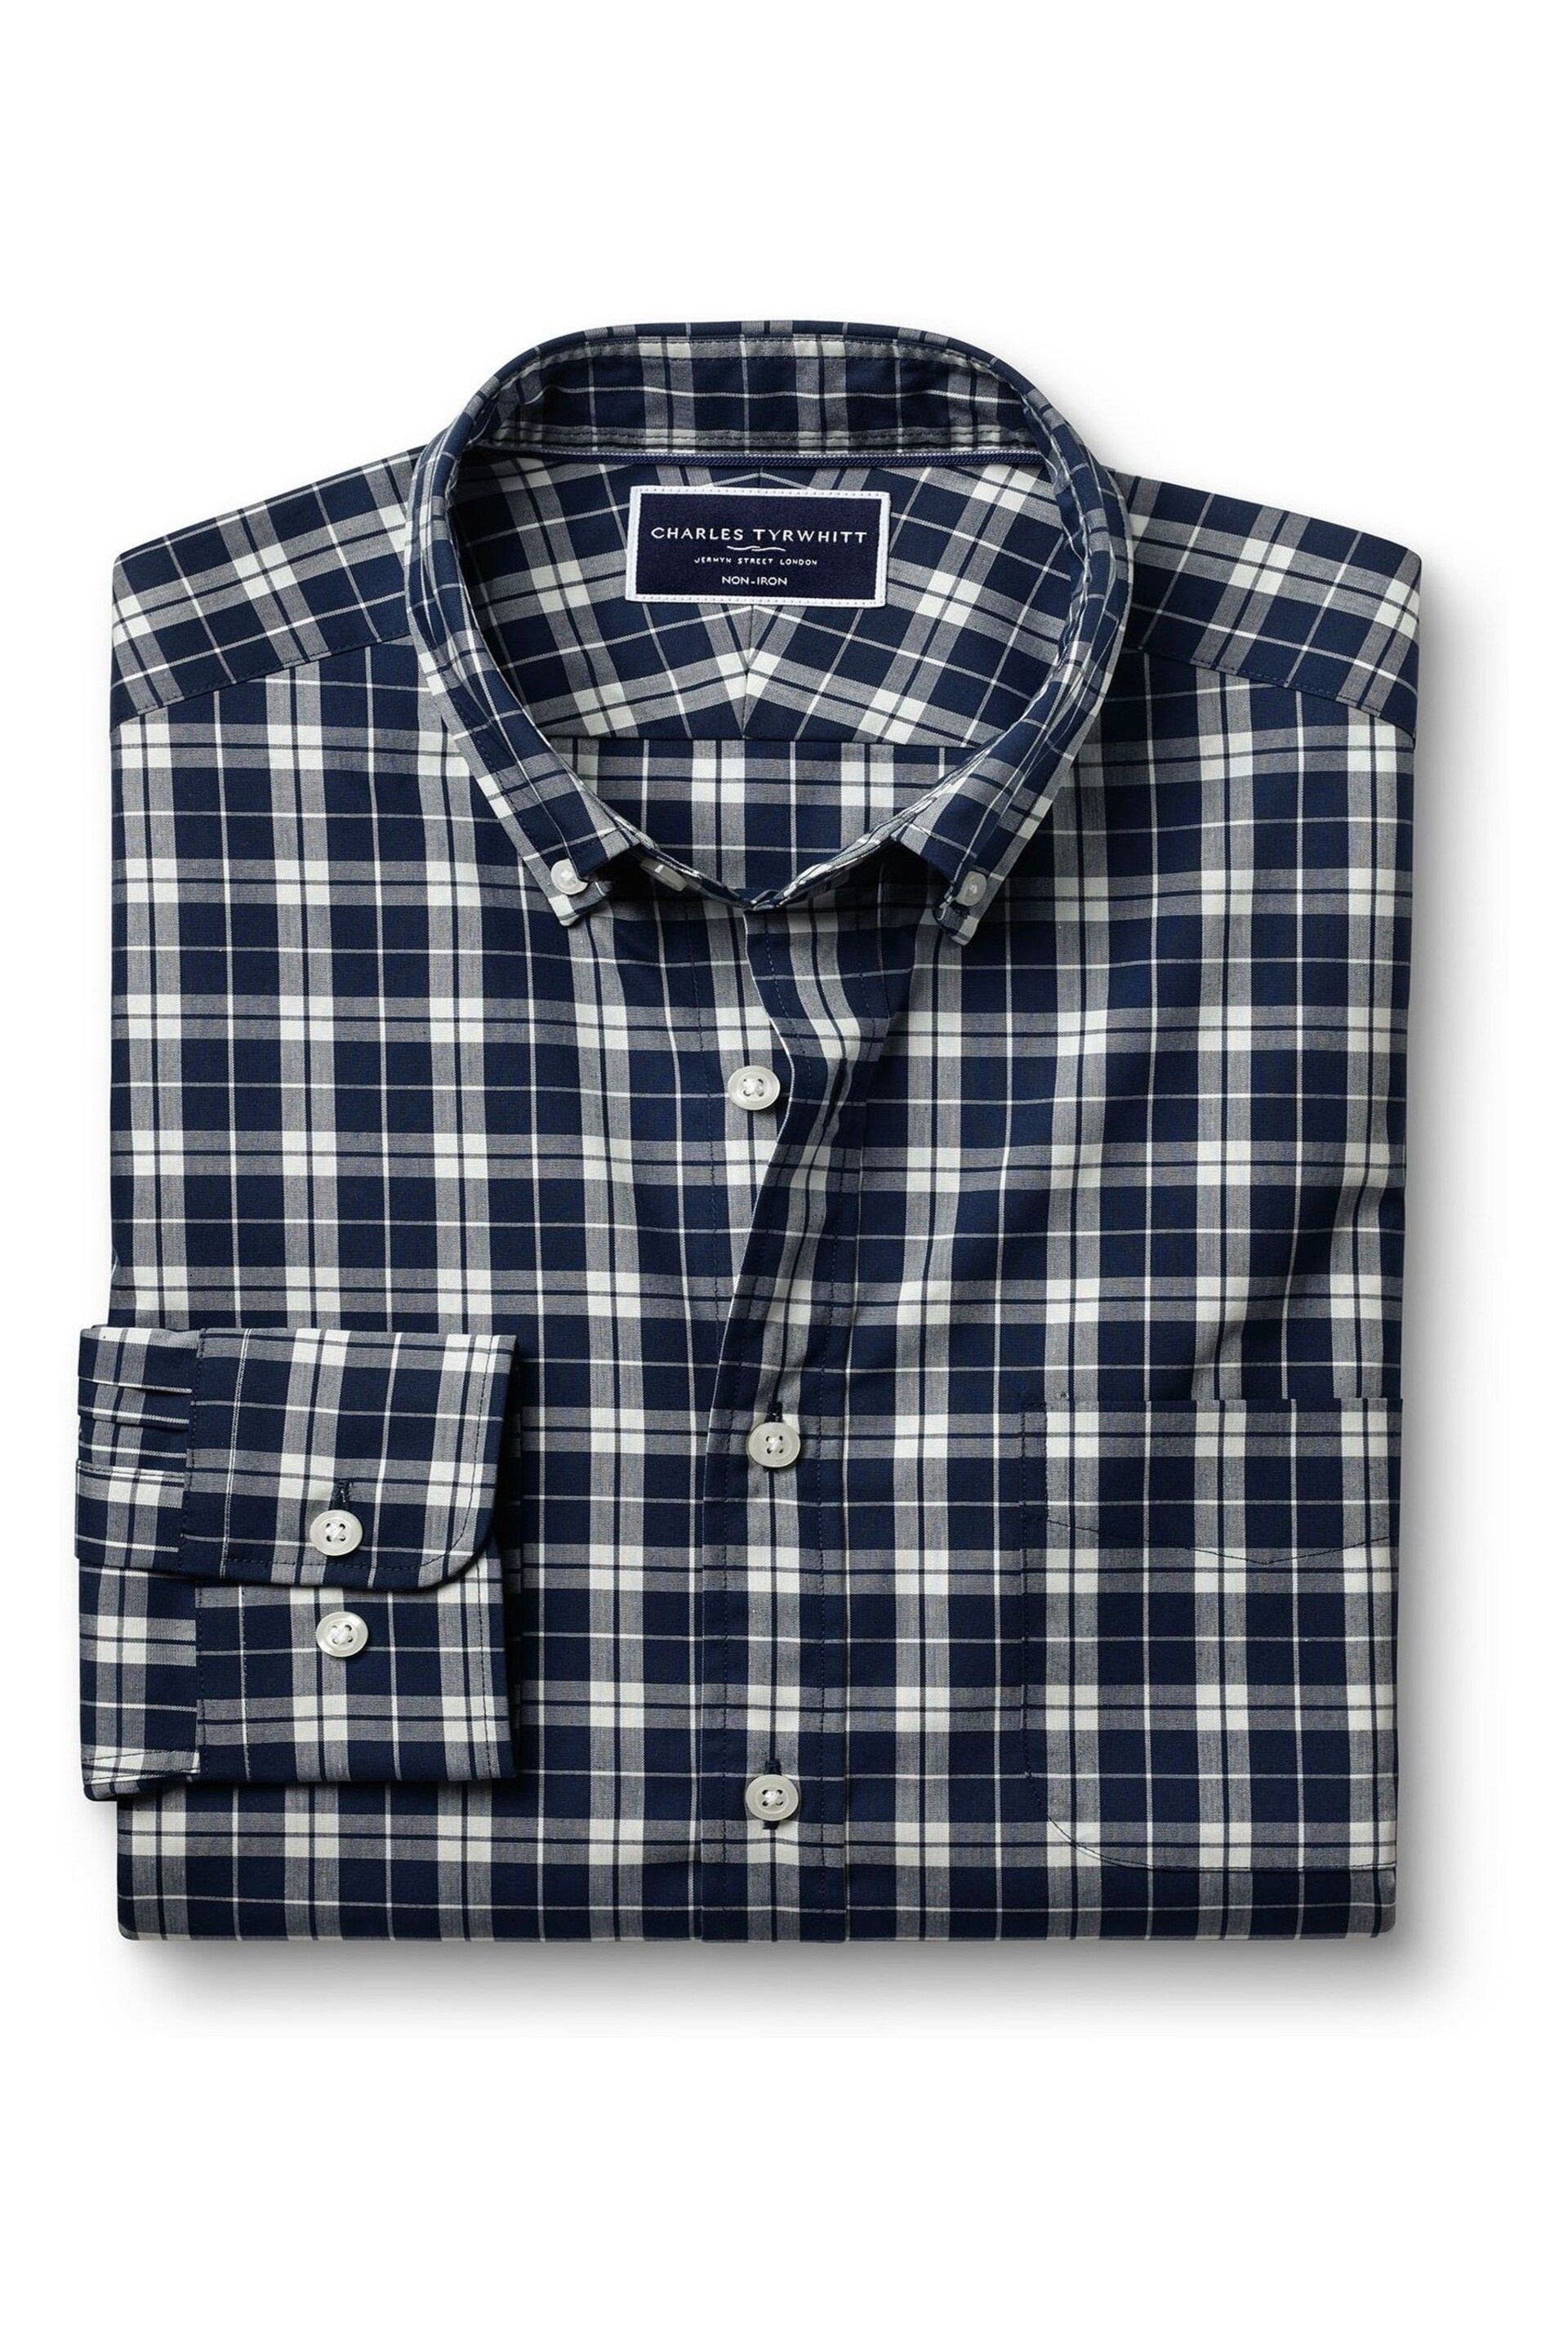 Charles Tyrwhitt Blue Check Non-Iron Stretch Poplin Slim Fit Shirt - Image 5 of 7